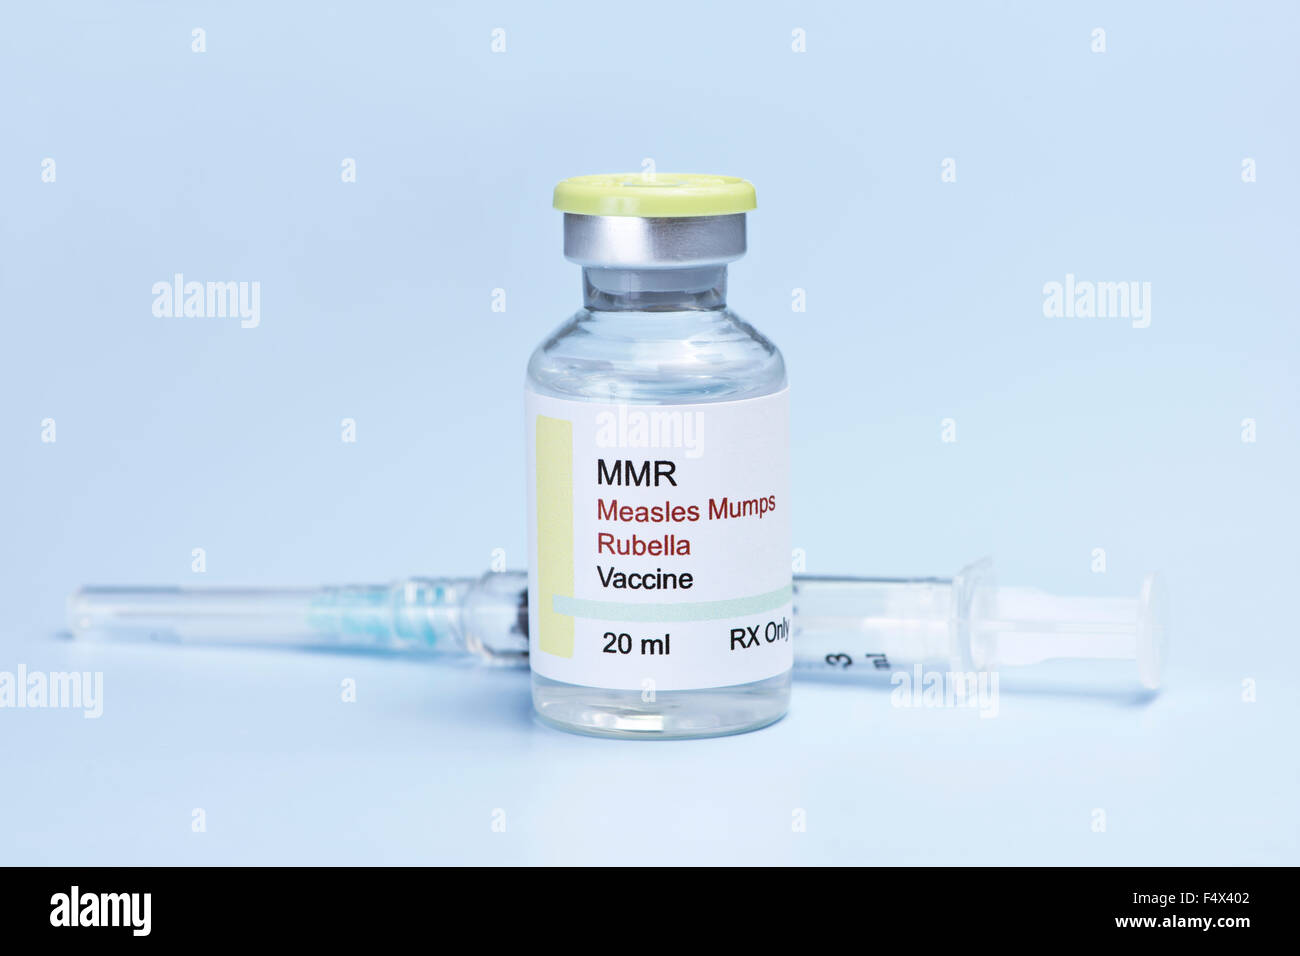 Measles, mumps, rubella, virus vaccine and syringe on blue background. Stock Photo